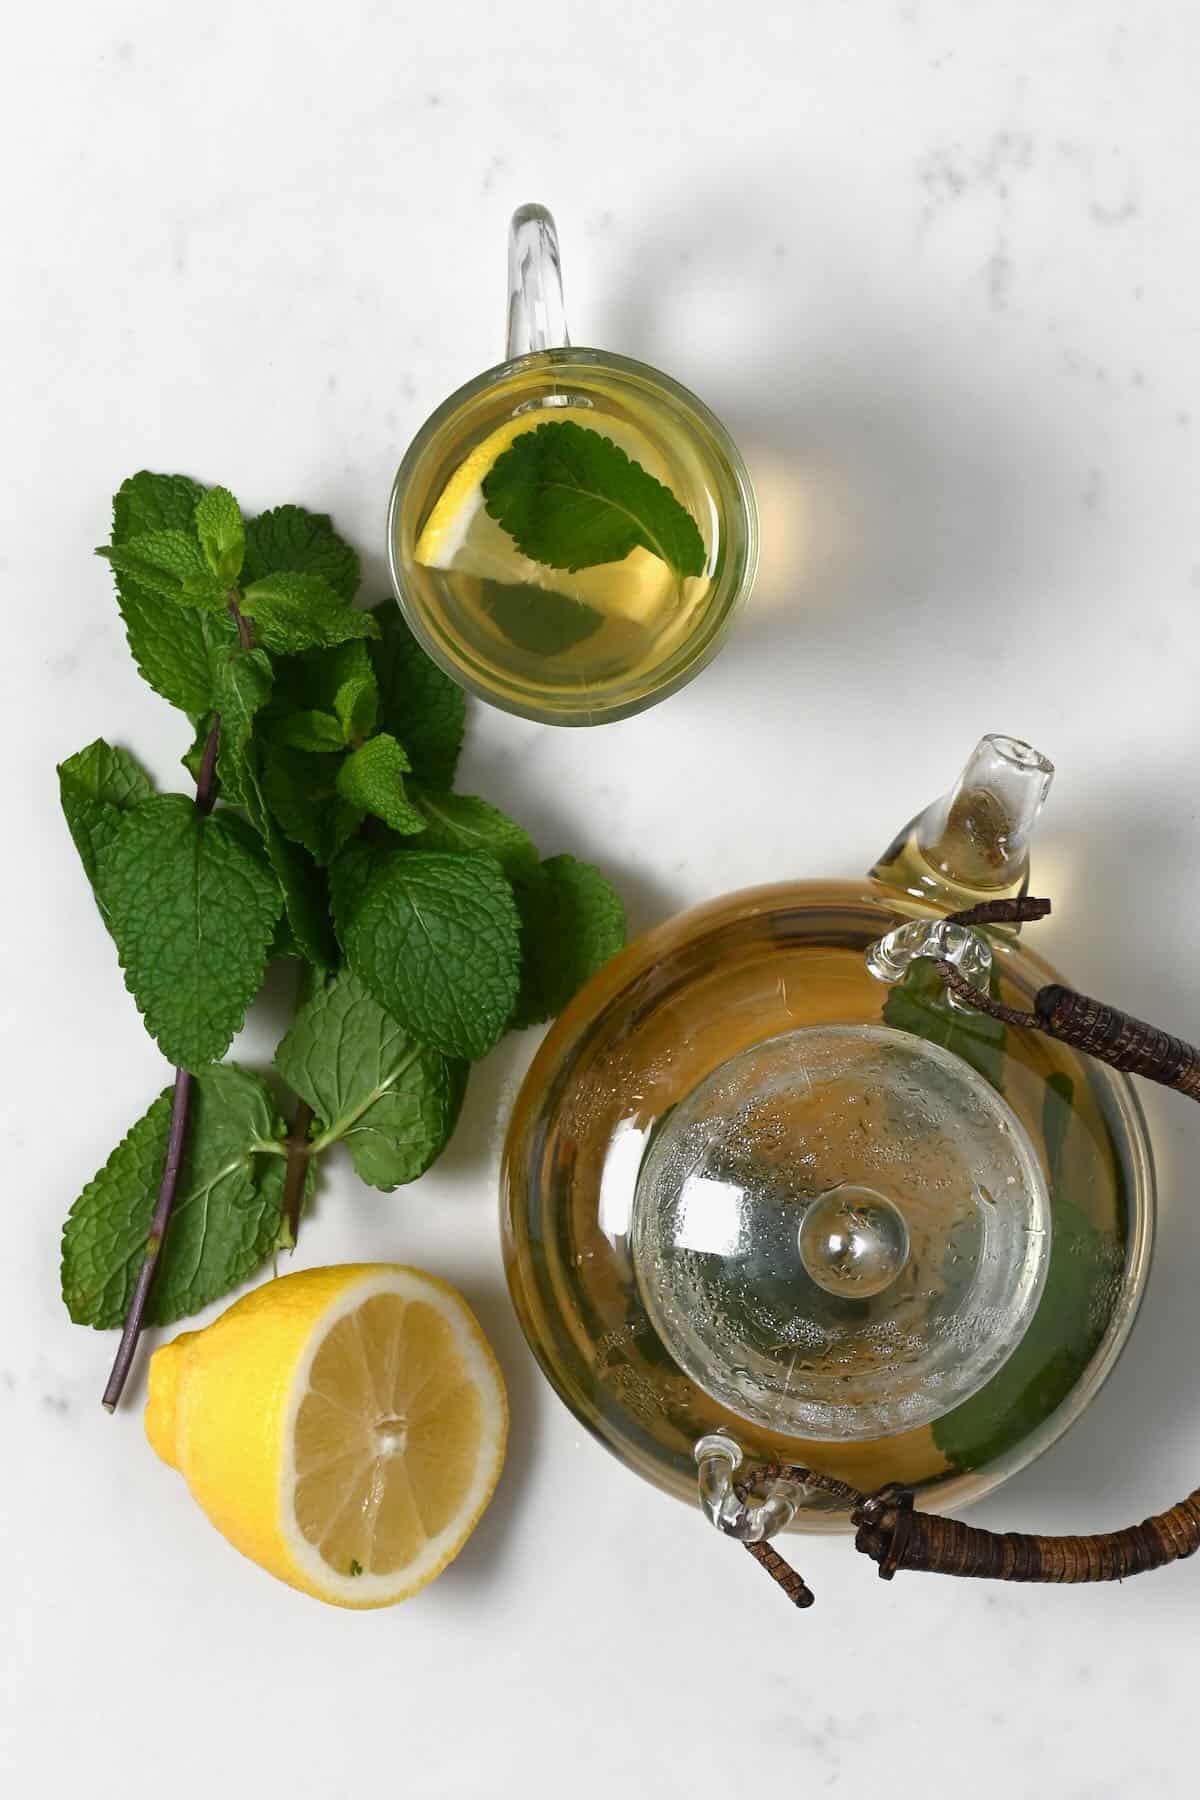 A glass and a teapot with mint tea and lemon slice